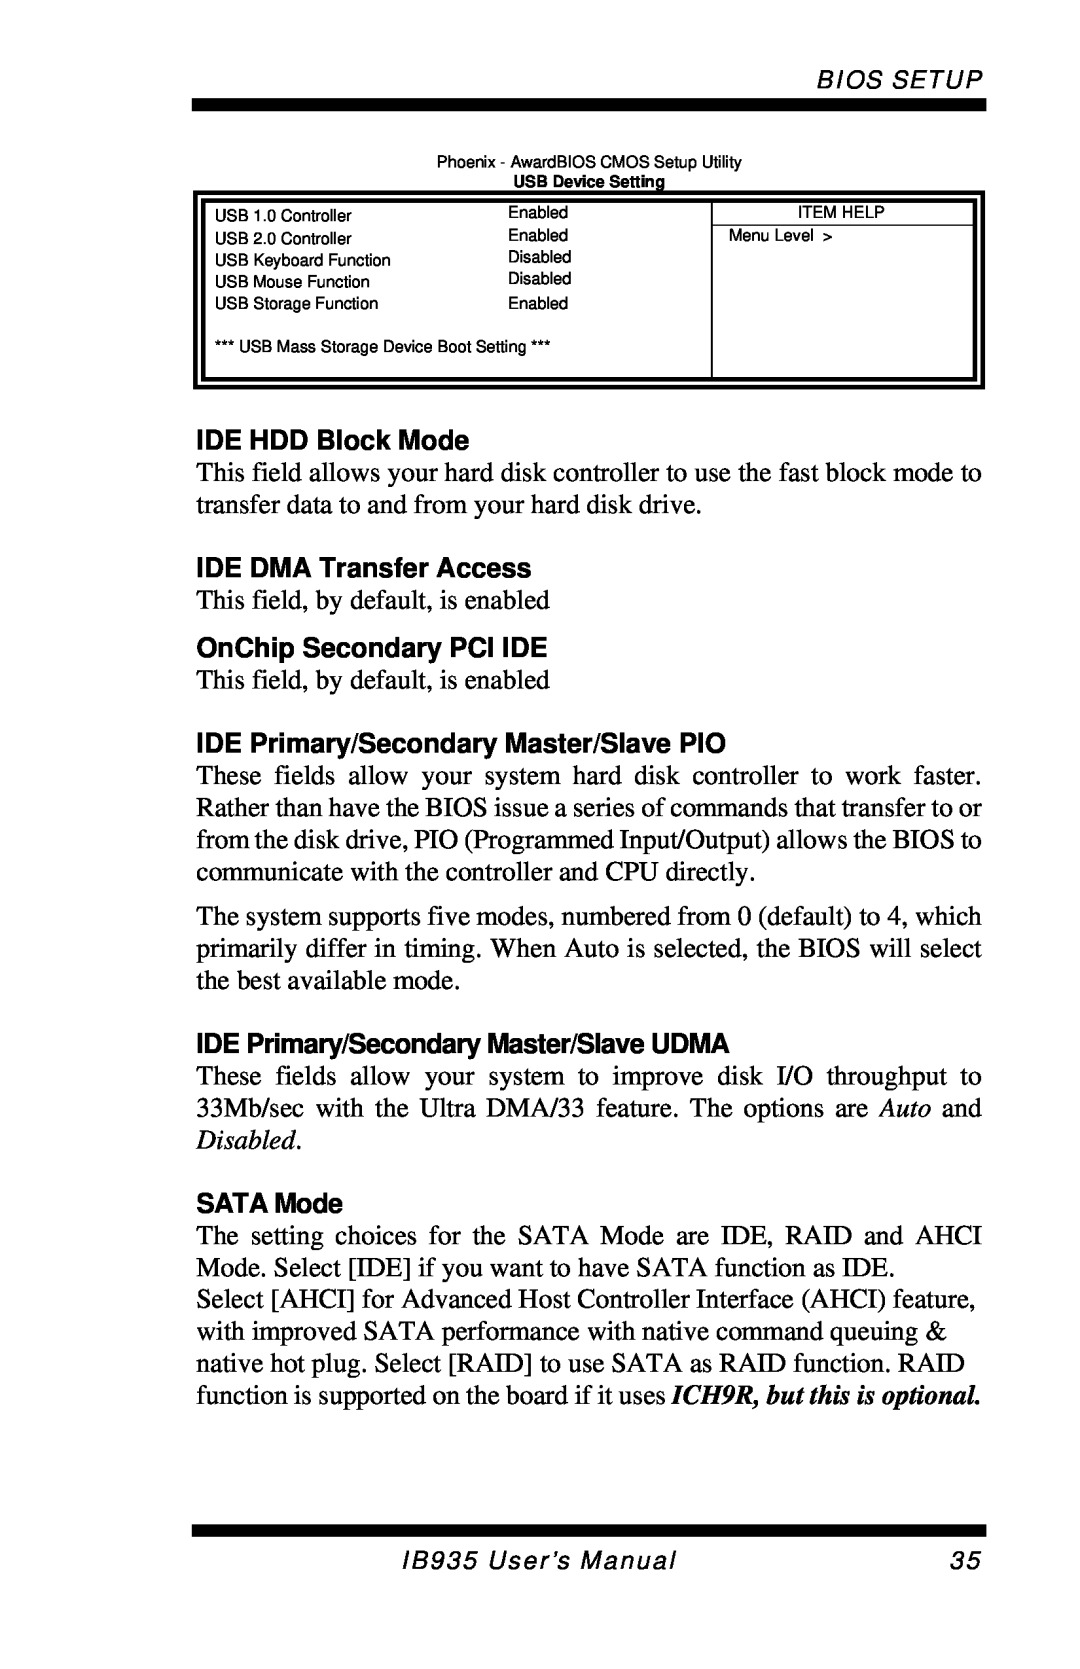 Intel IB935 IDE HDD Block Mode, IDE DMA Transfer Access, OnChip Secondary PCI IDE, IDE Primary/Secondary Master/Slave PIO 